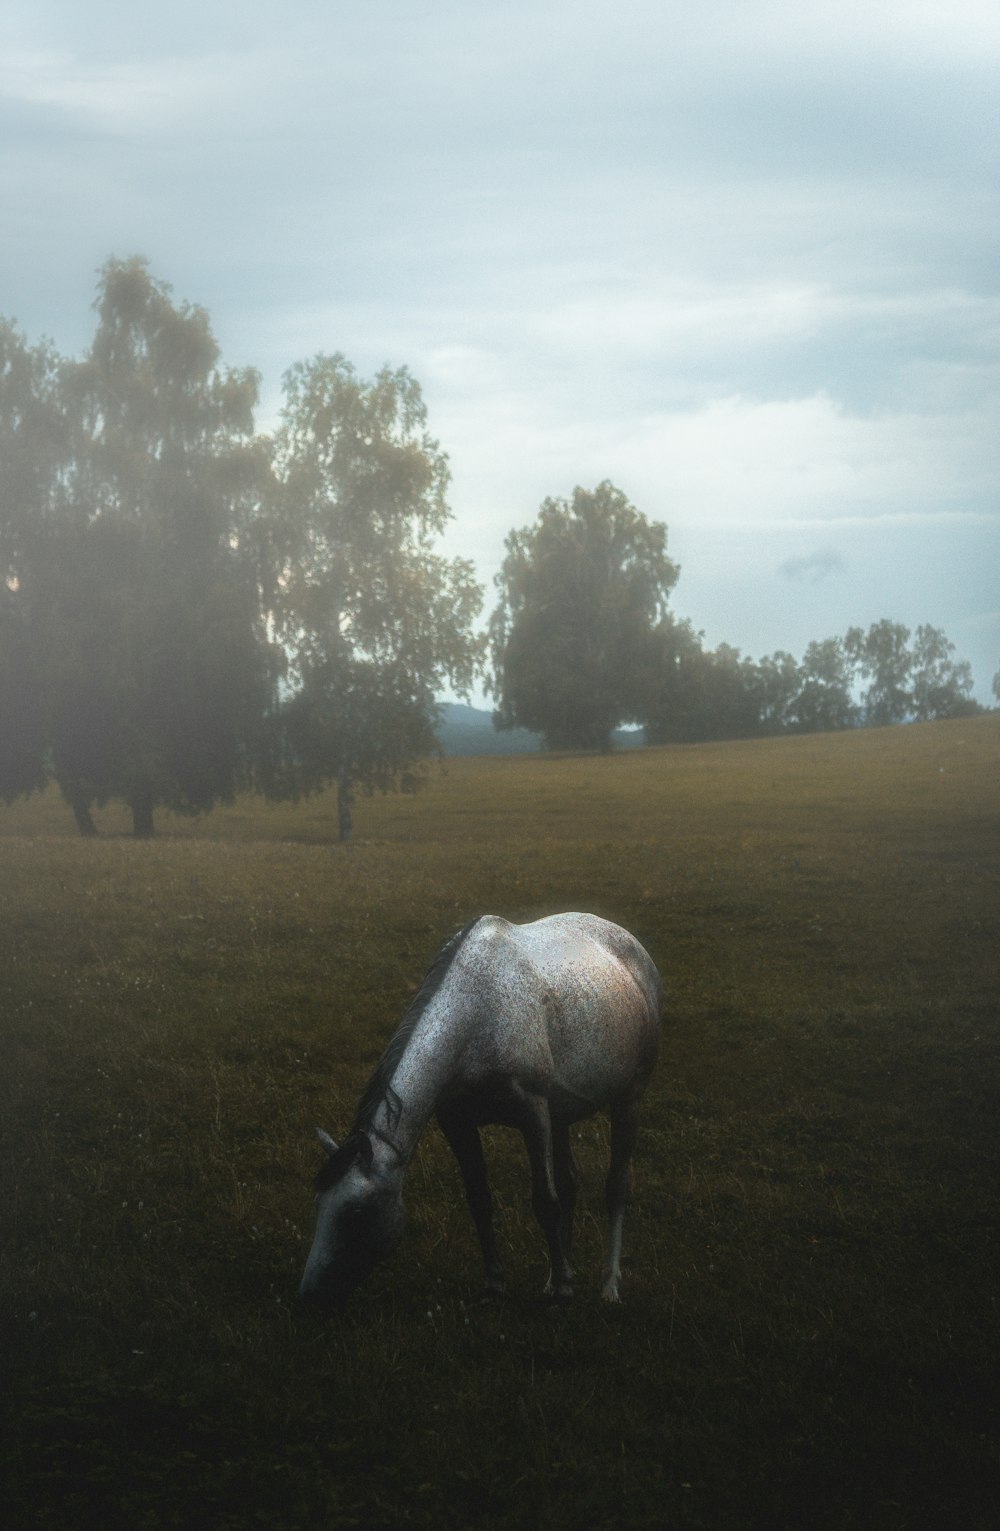 white horse eating grass during daytime